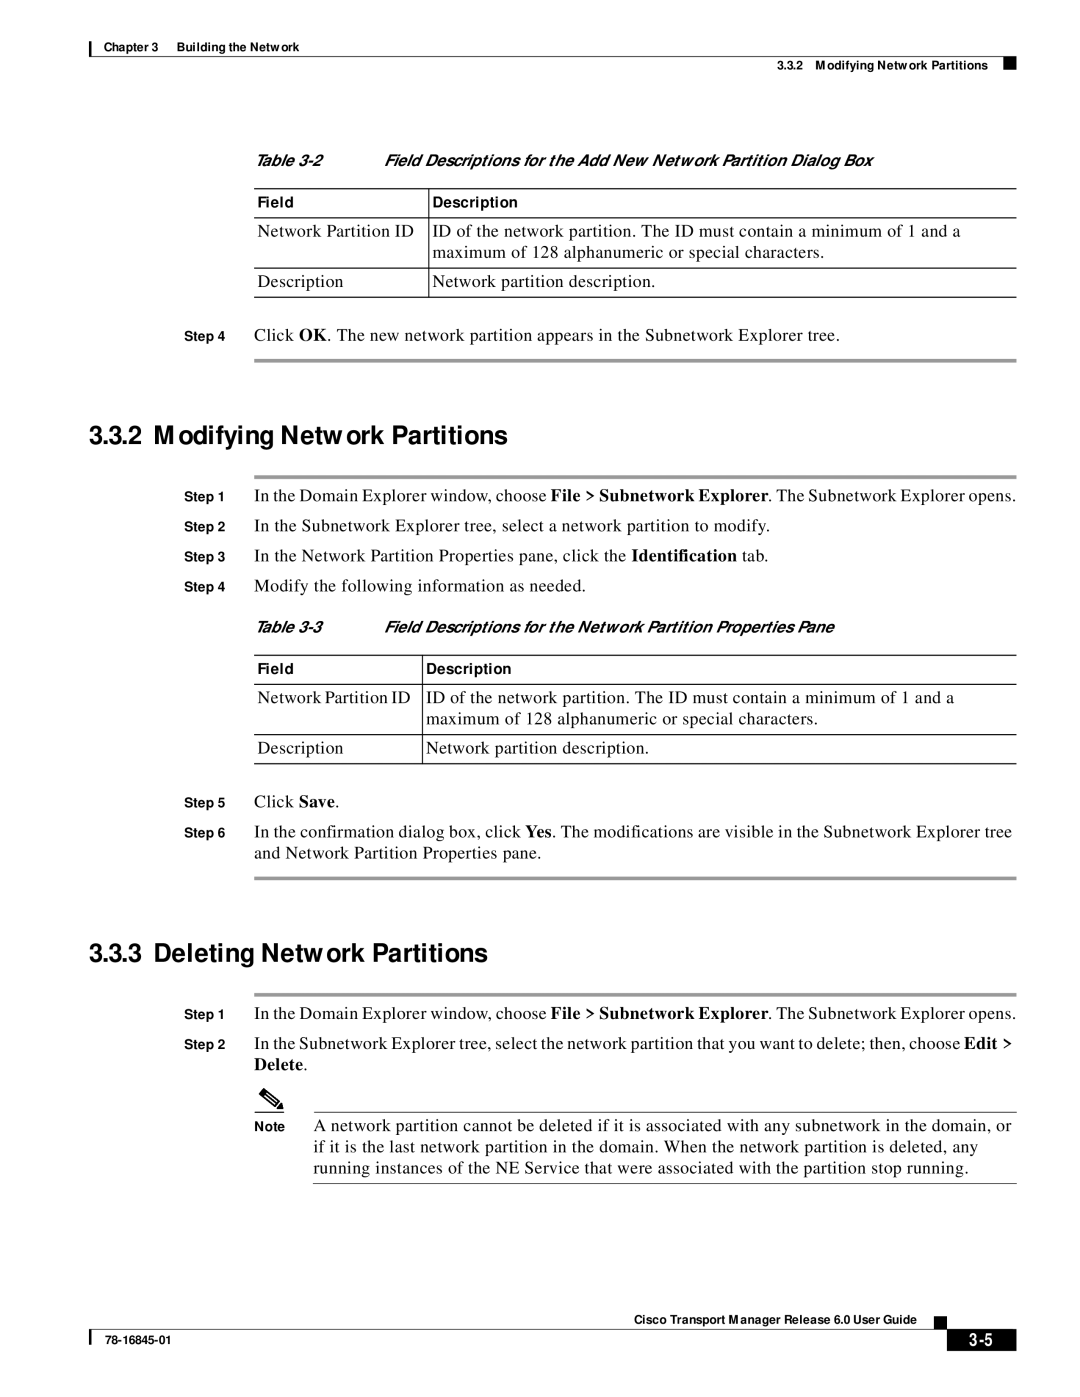 Cisco Systems 78-16845-01 manual Modifying Network Partitions, Deleting Network Partitions 